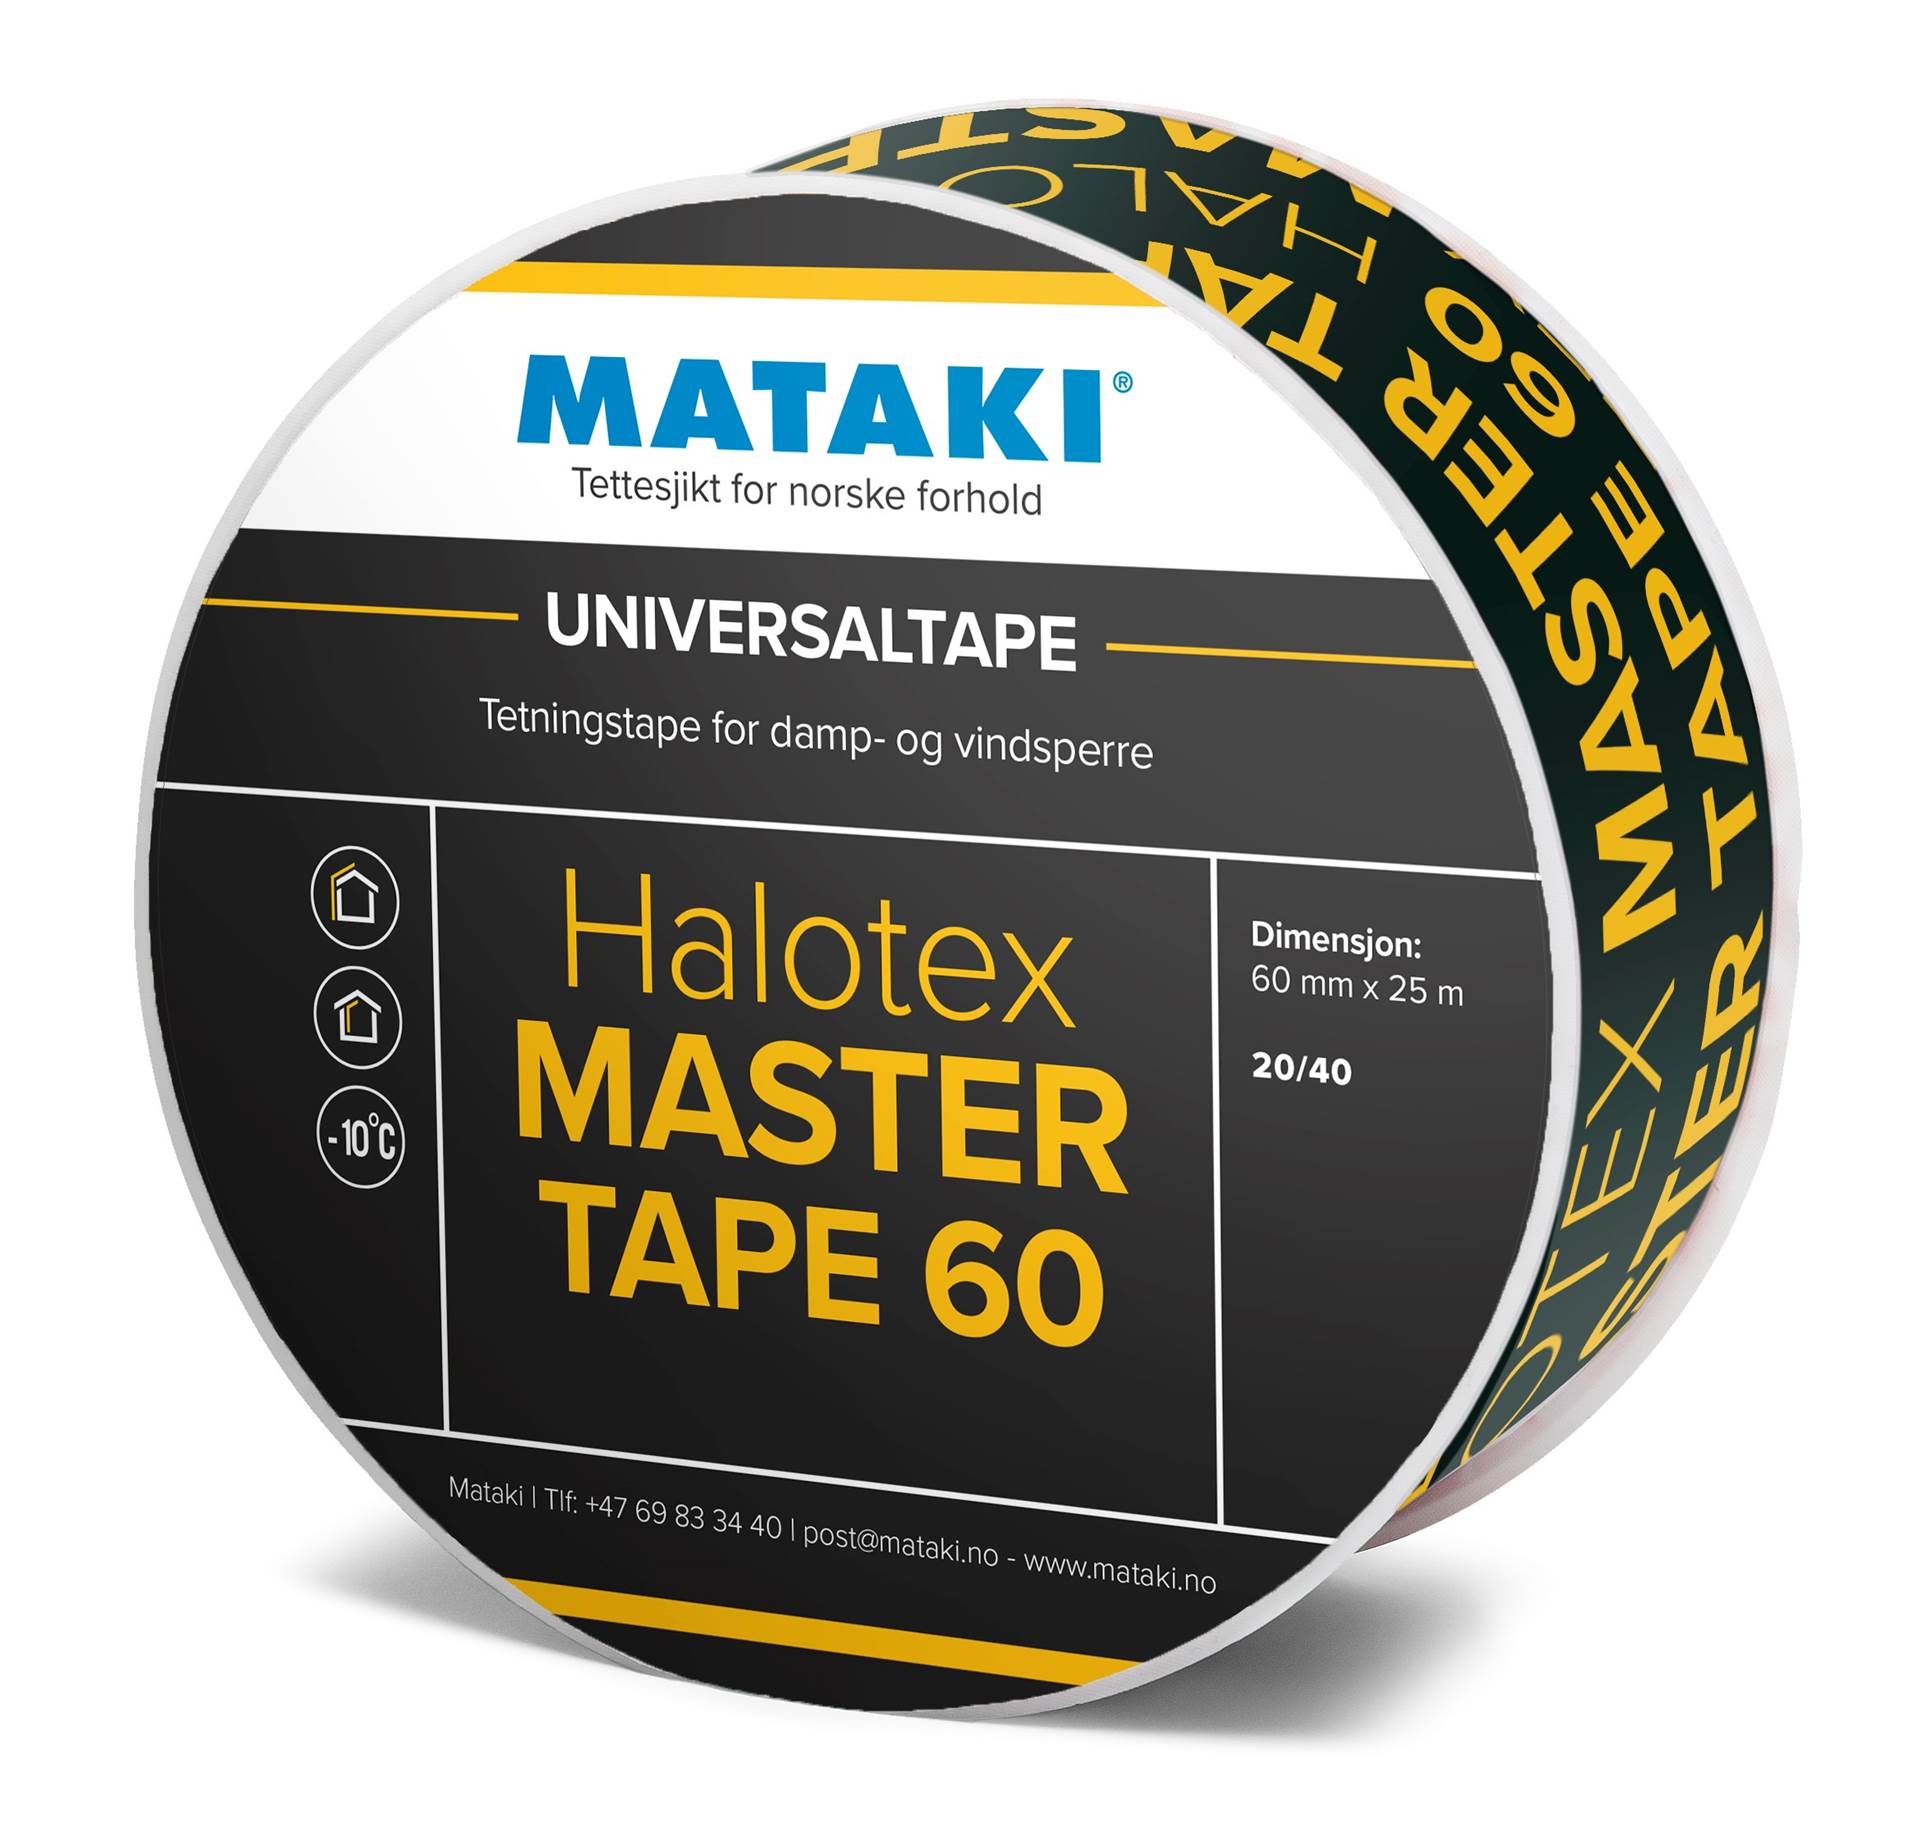 PB_Master tape 60_740033